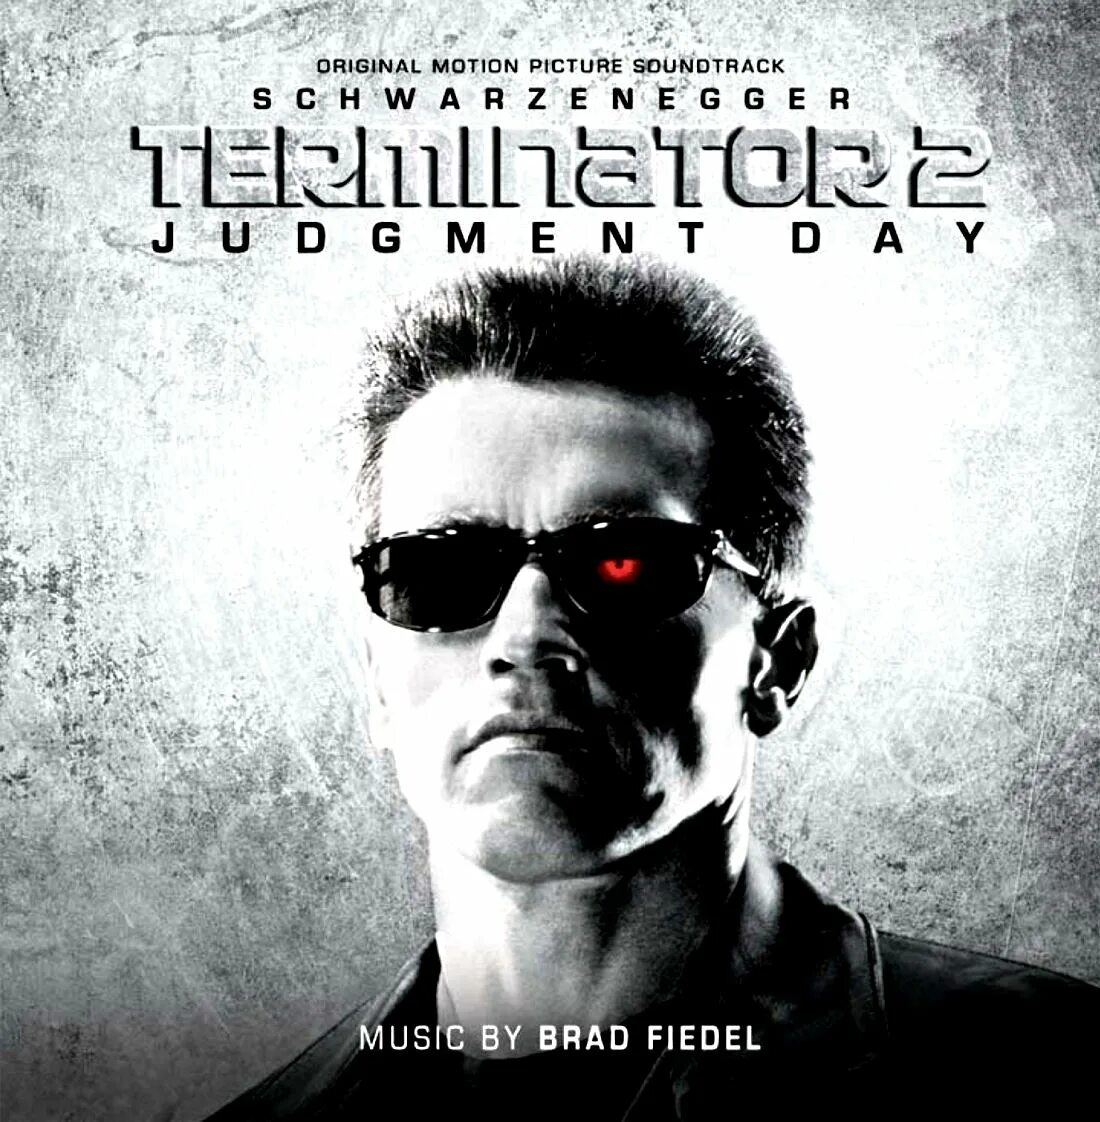 Brad Fiedel Terminator 2. Brad Fiedel Terminator Theme. Terminator 2 Judgment Day. Ost terminator